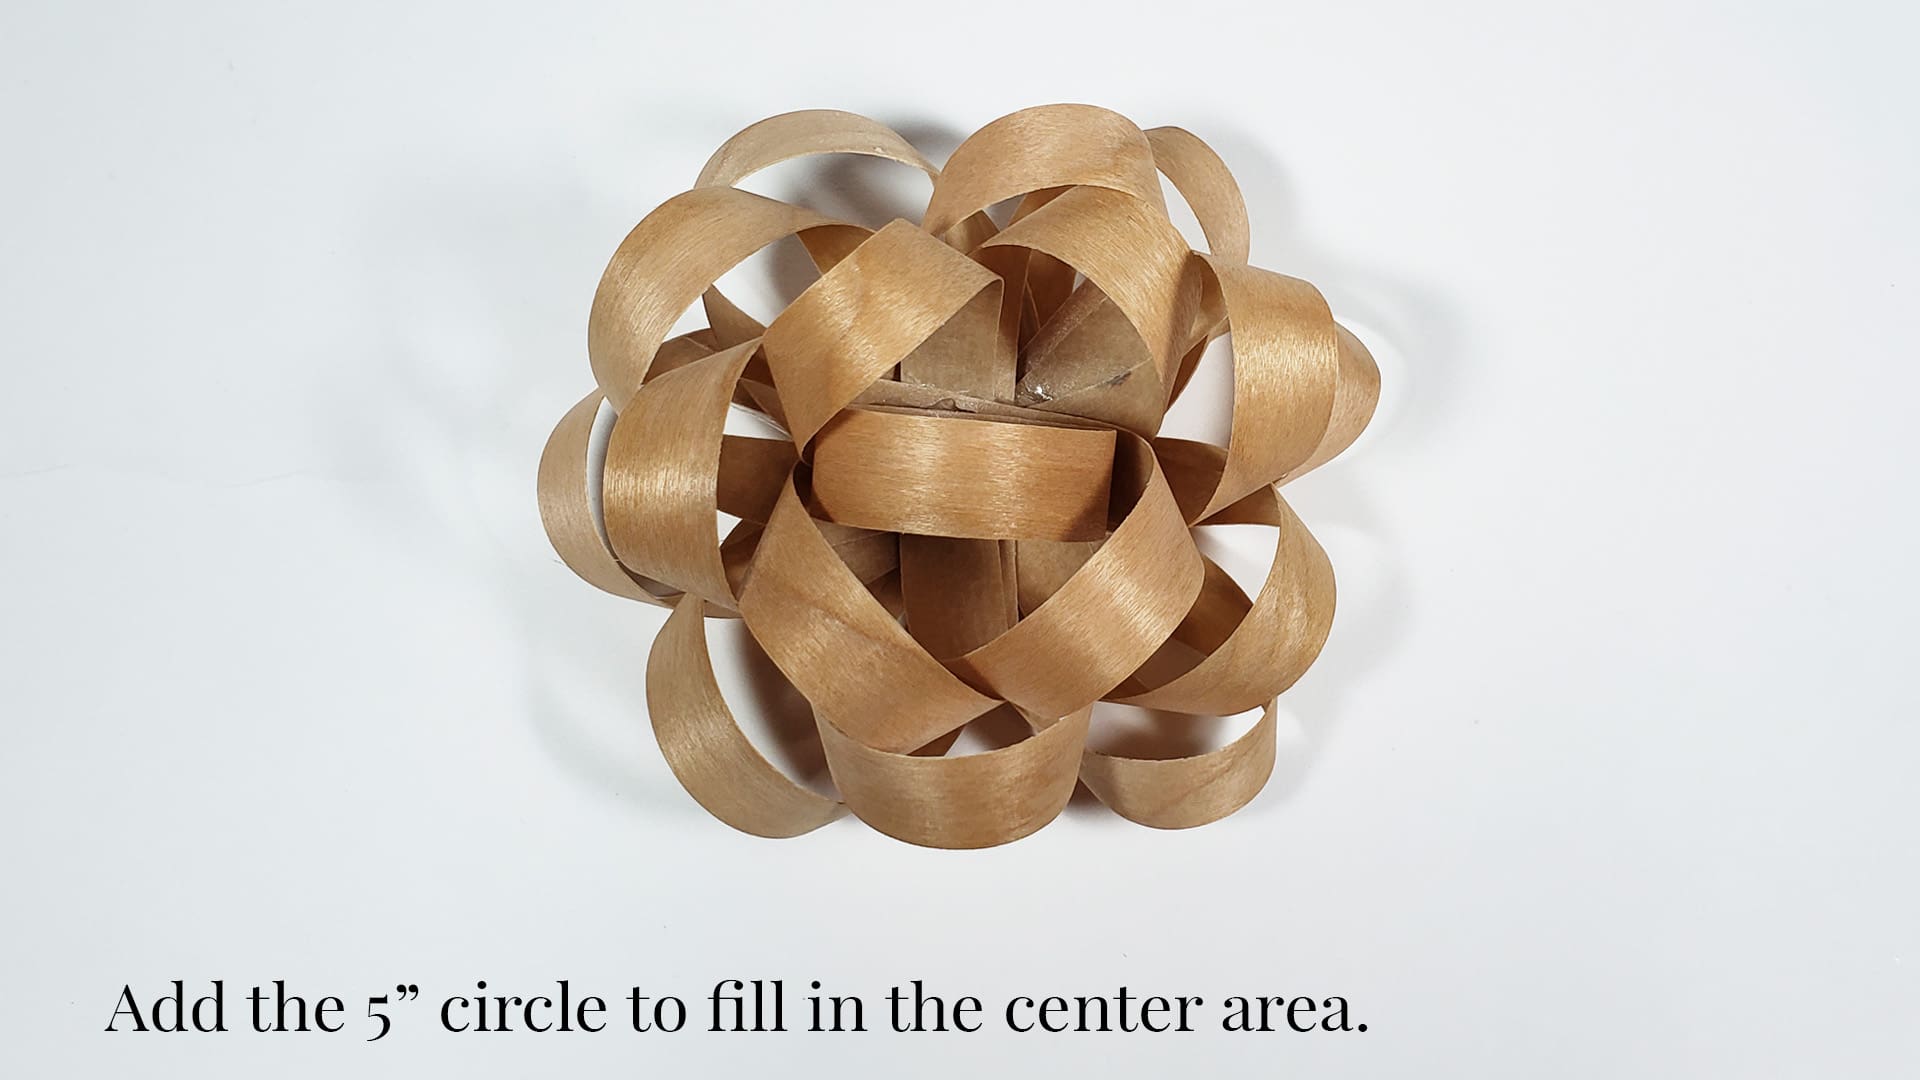 Add the center circle